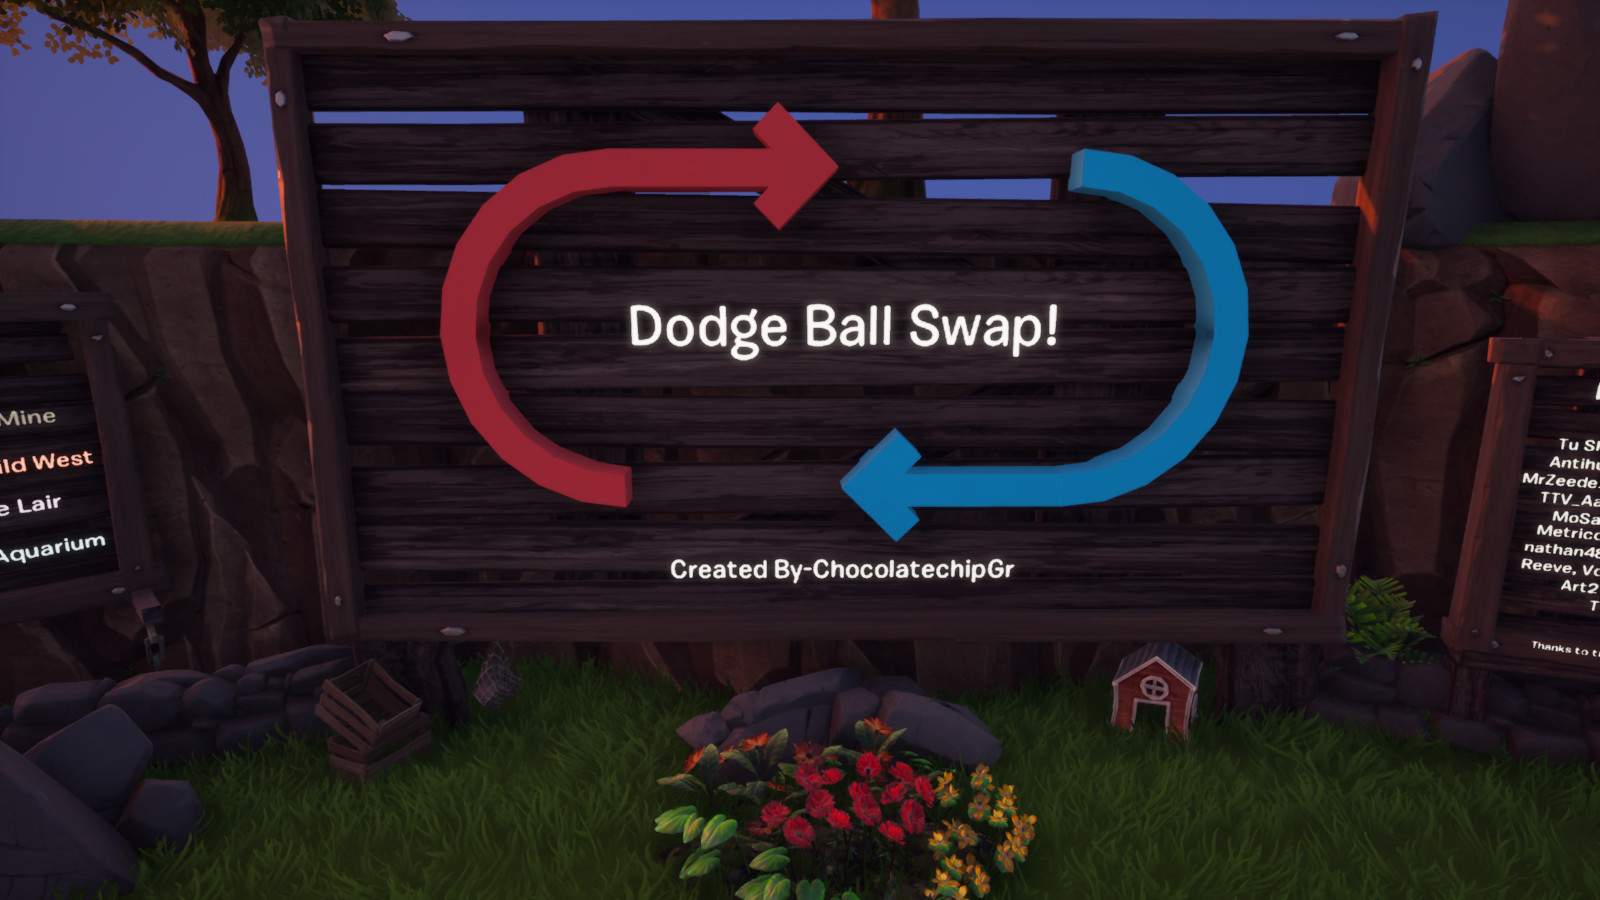 DODGE BALL SWAP!